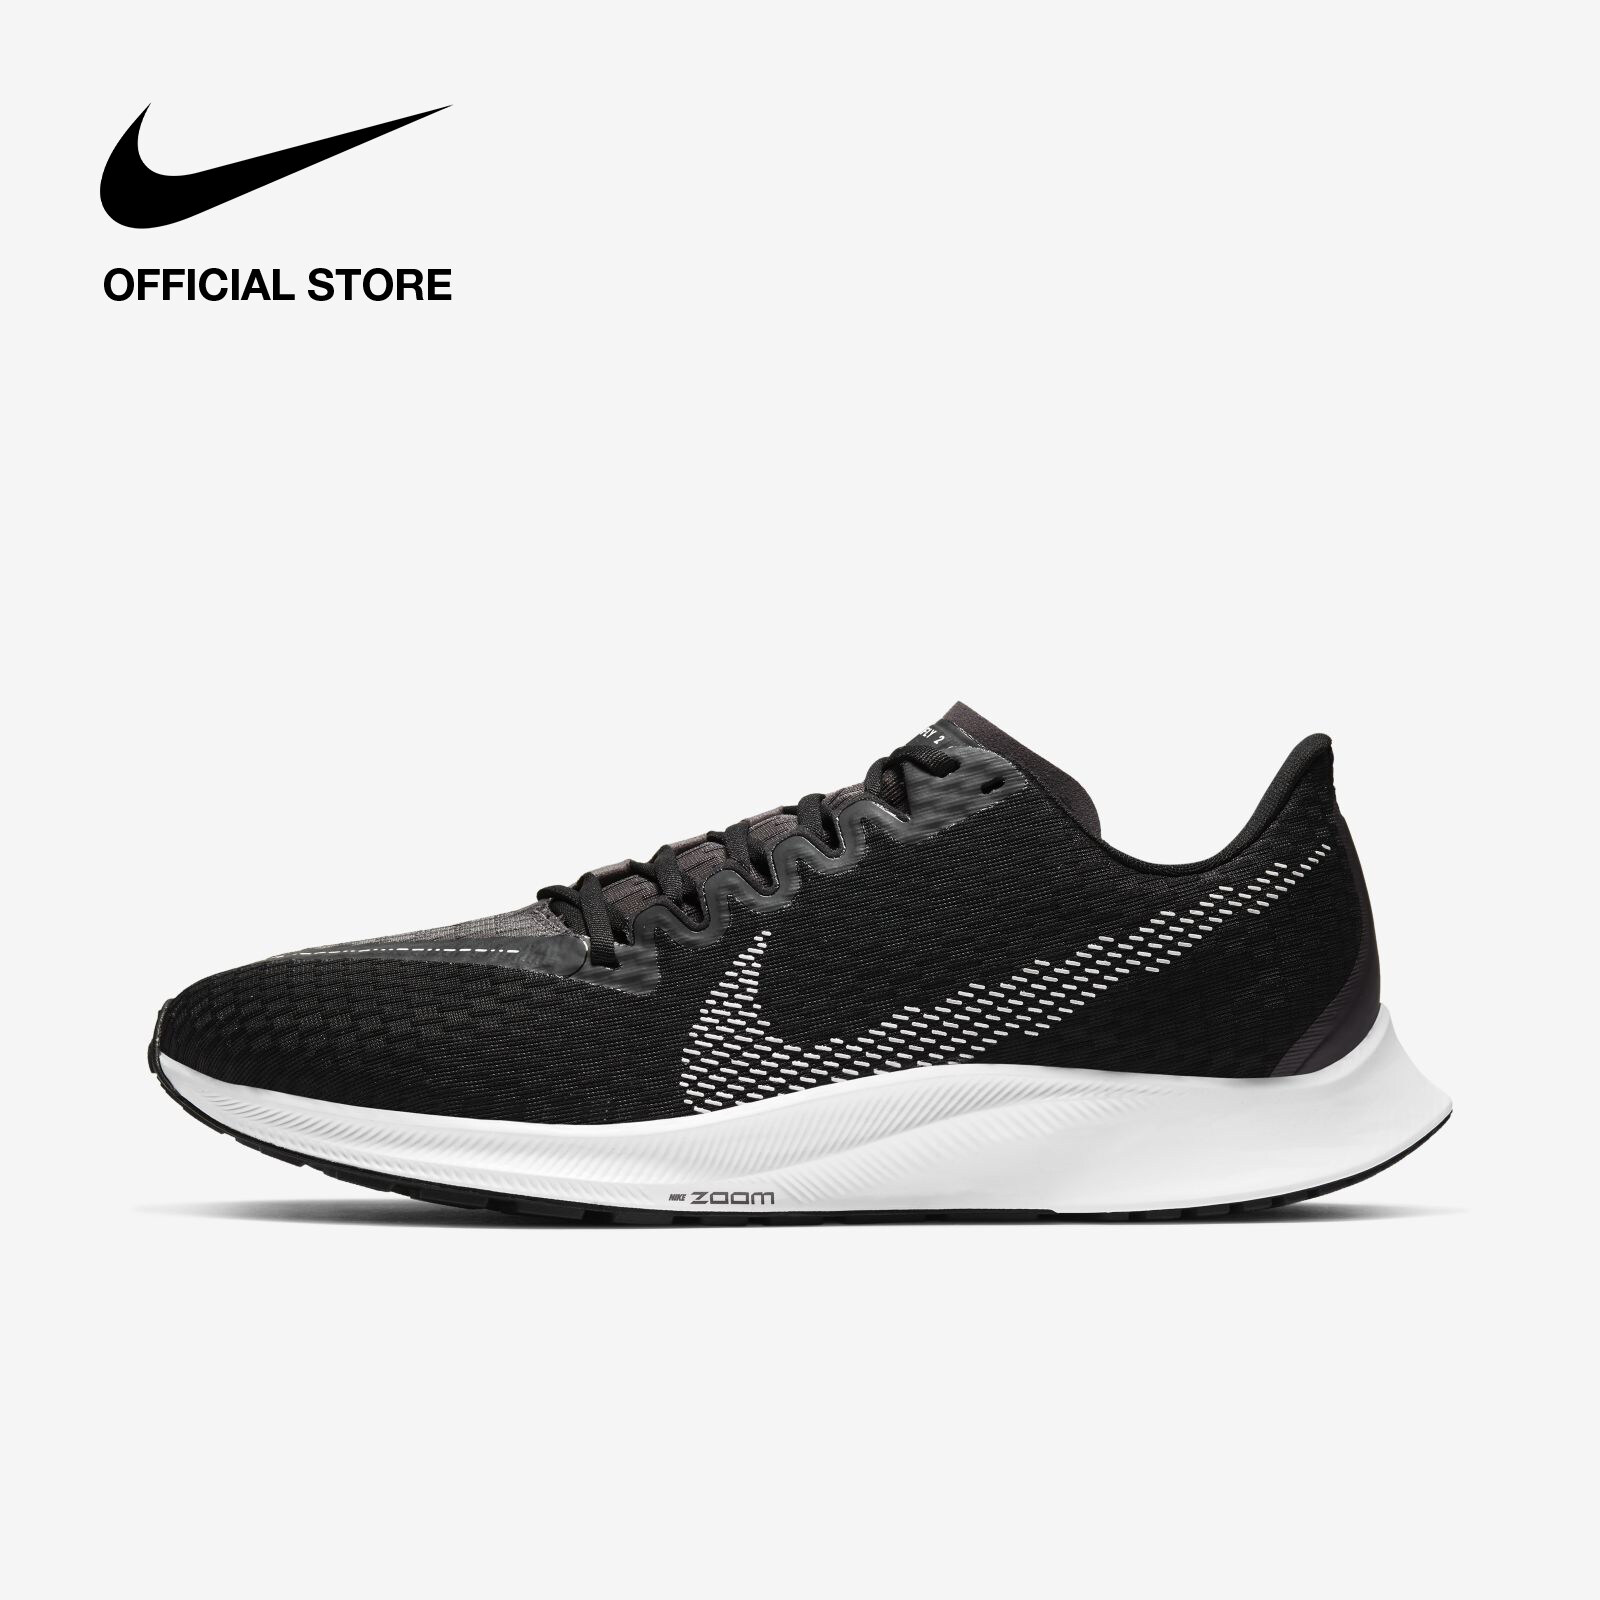 Nike Men's Zoom Rival Fly 2 Shoes - Black รองเท้าผู้ชาย Nike Zoom Rival Fly 2 - สีดำ